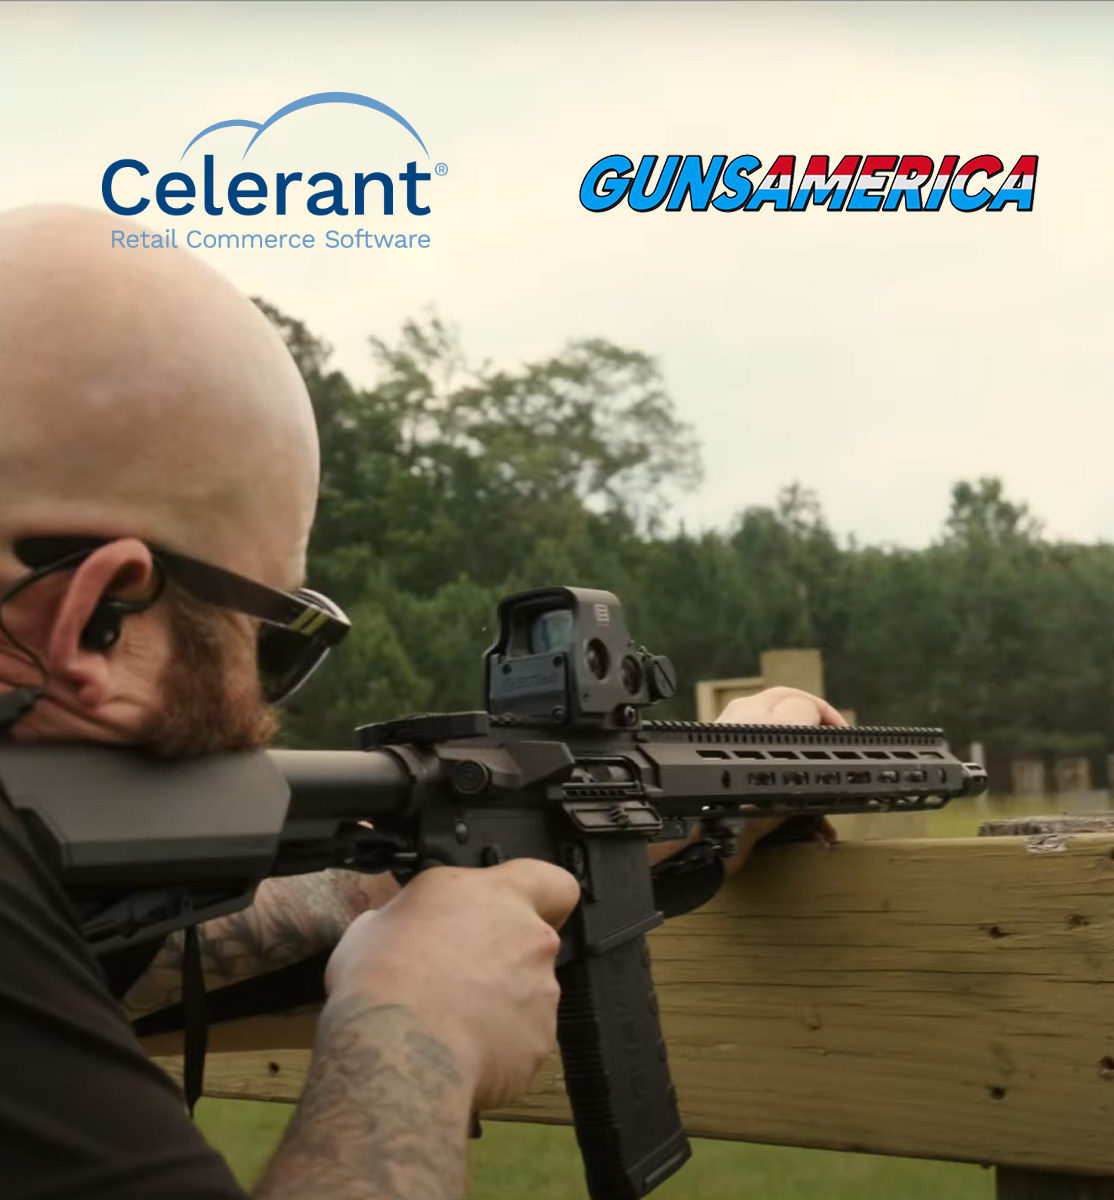 GunsAmerica integrates with Celerant's retail software